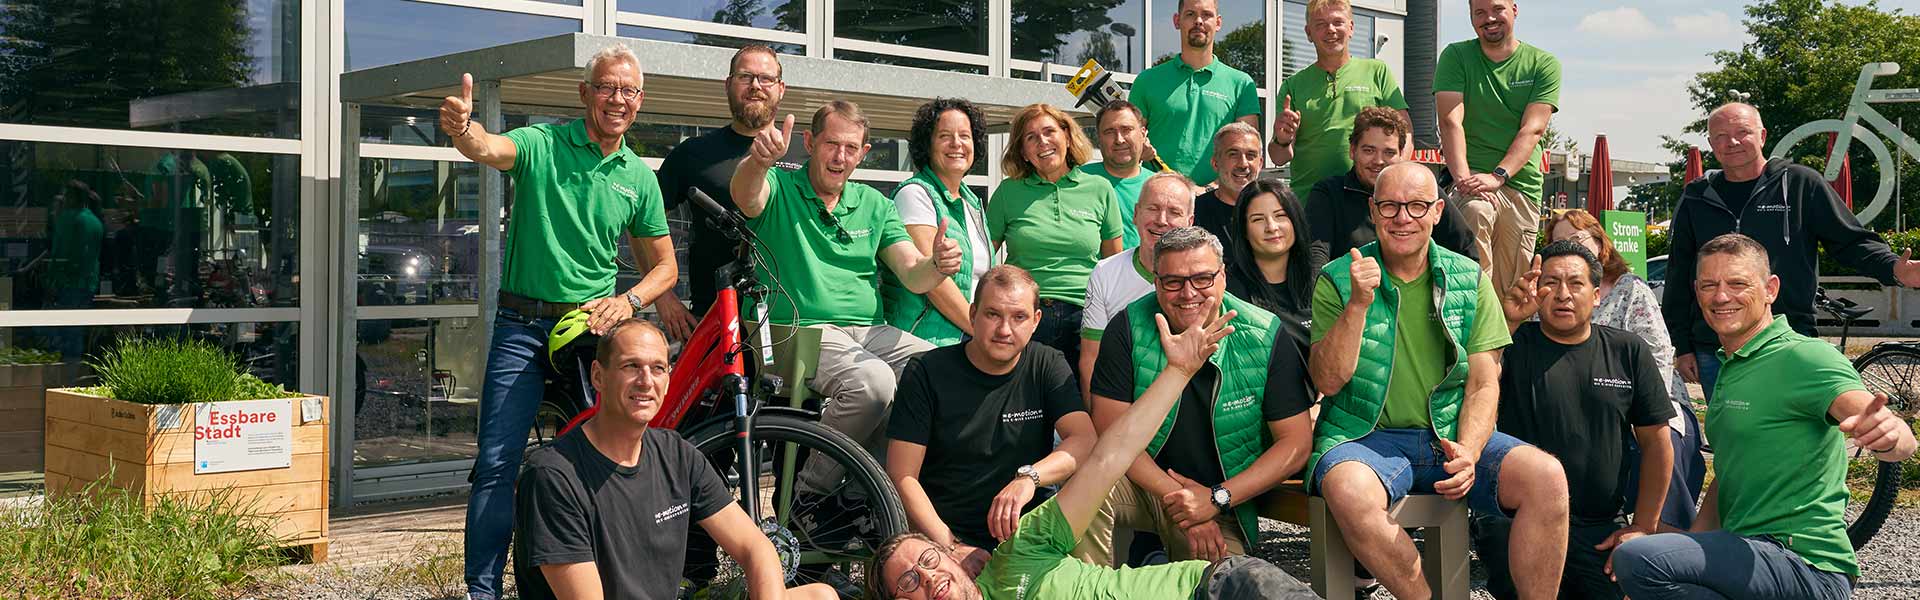 Das Team der e-motion e-Bike Welt Düsseldorf